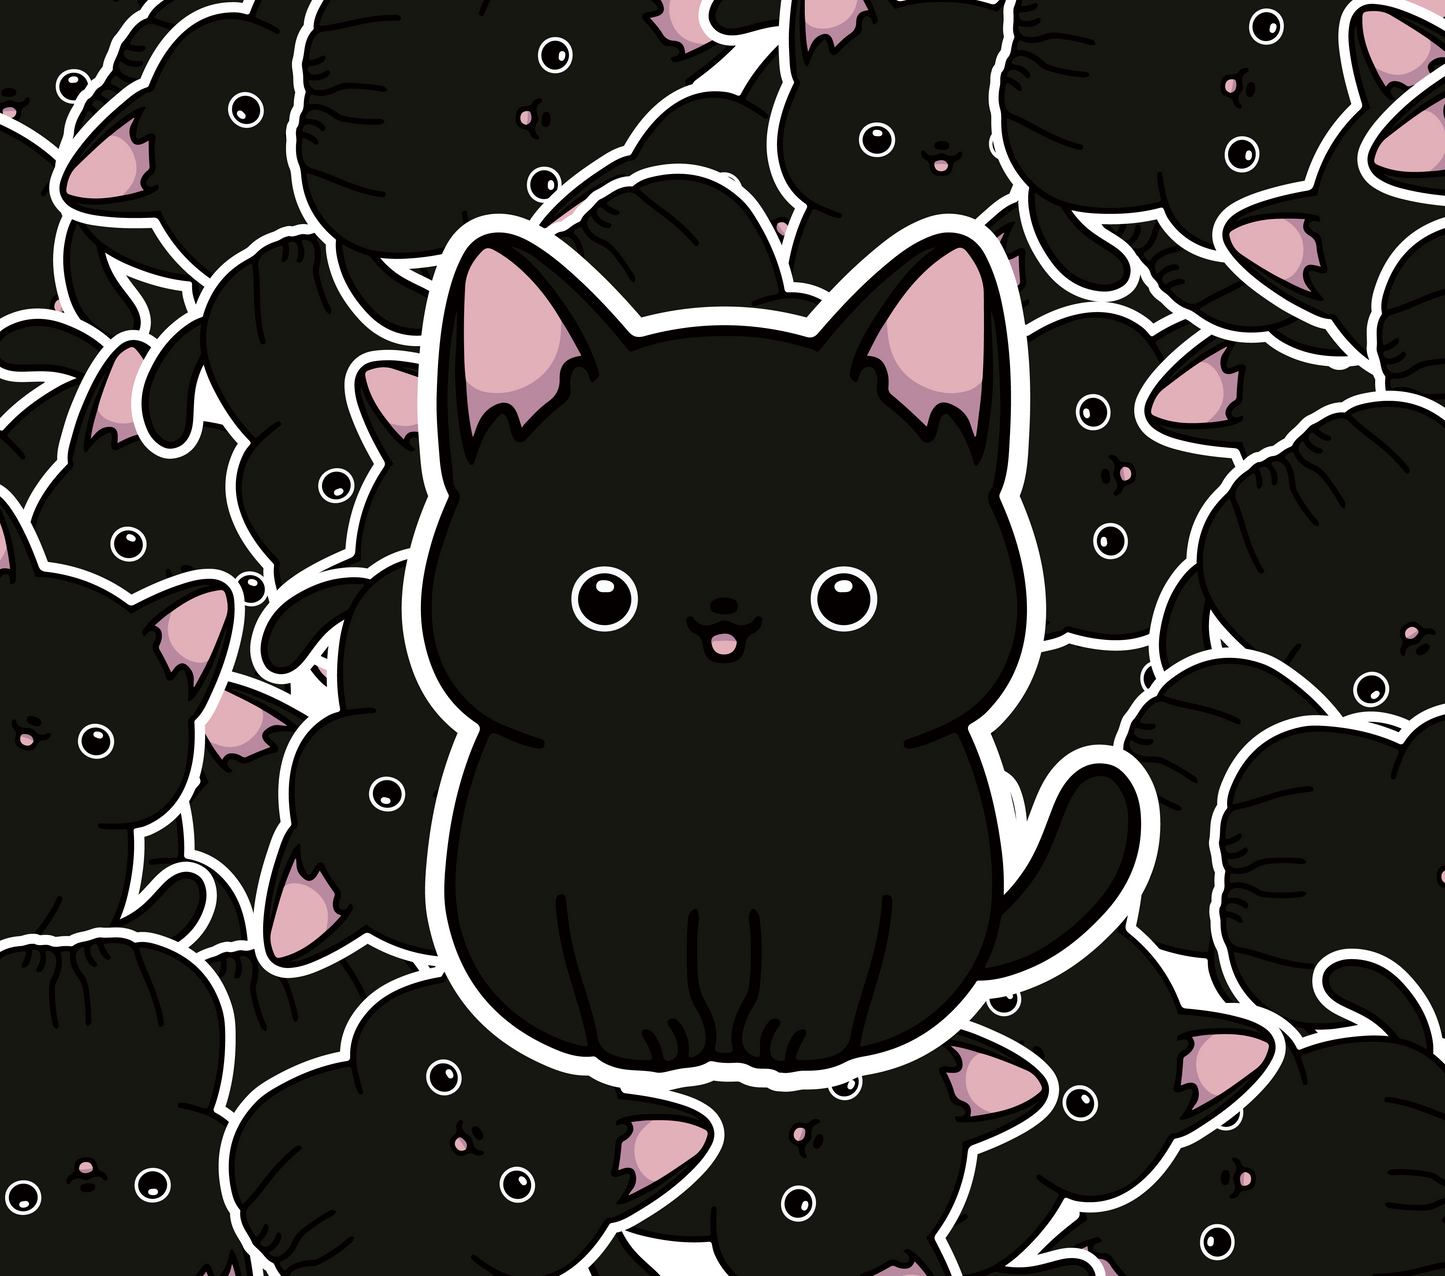 Black Sitting Cat Sticker  | Cat Sticker | Cat Lover | Waterproof Sticker